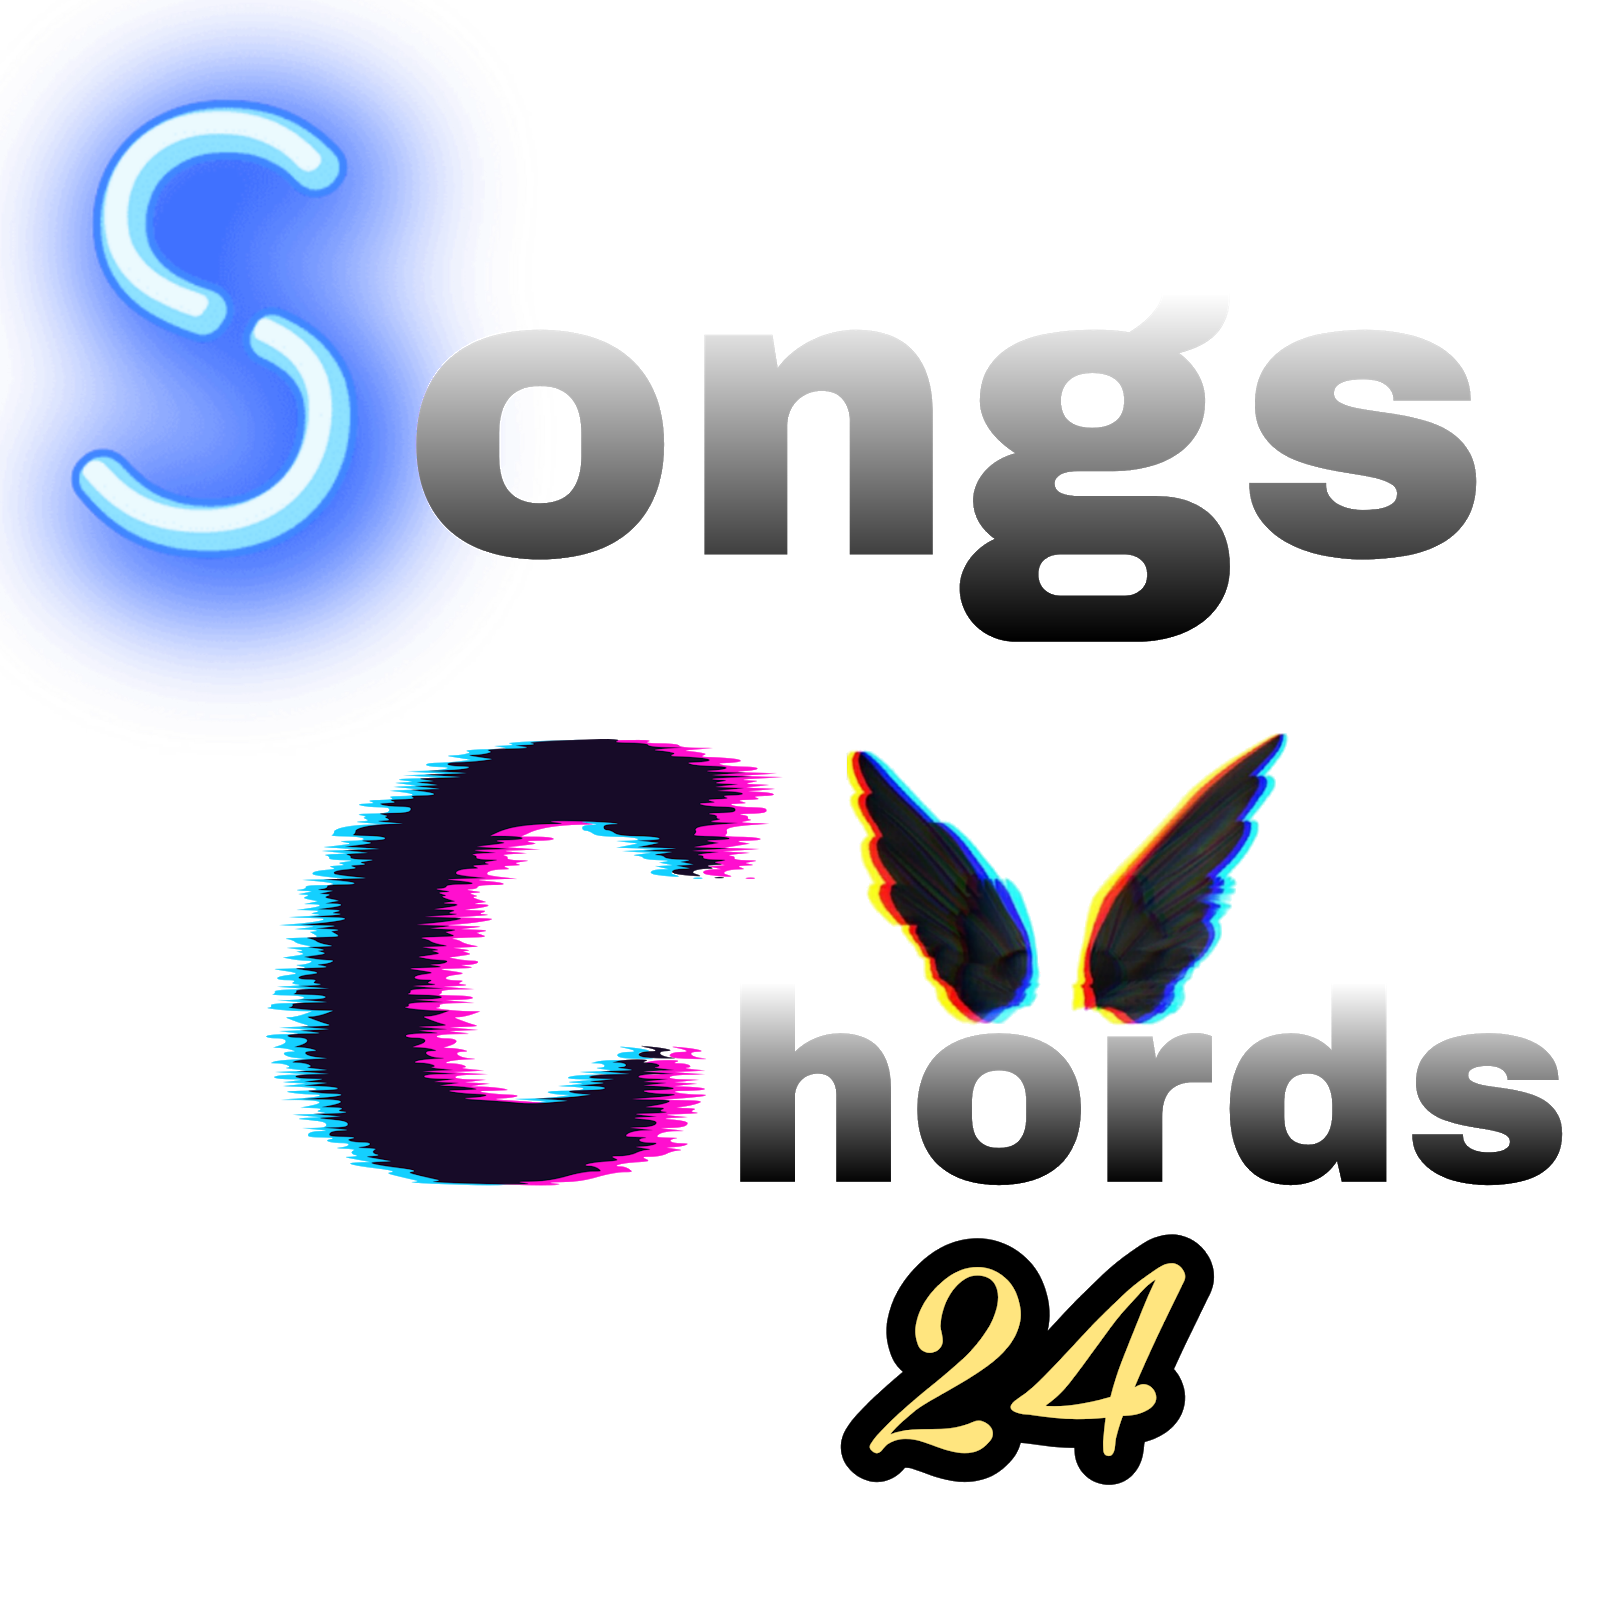 SongsChords